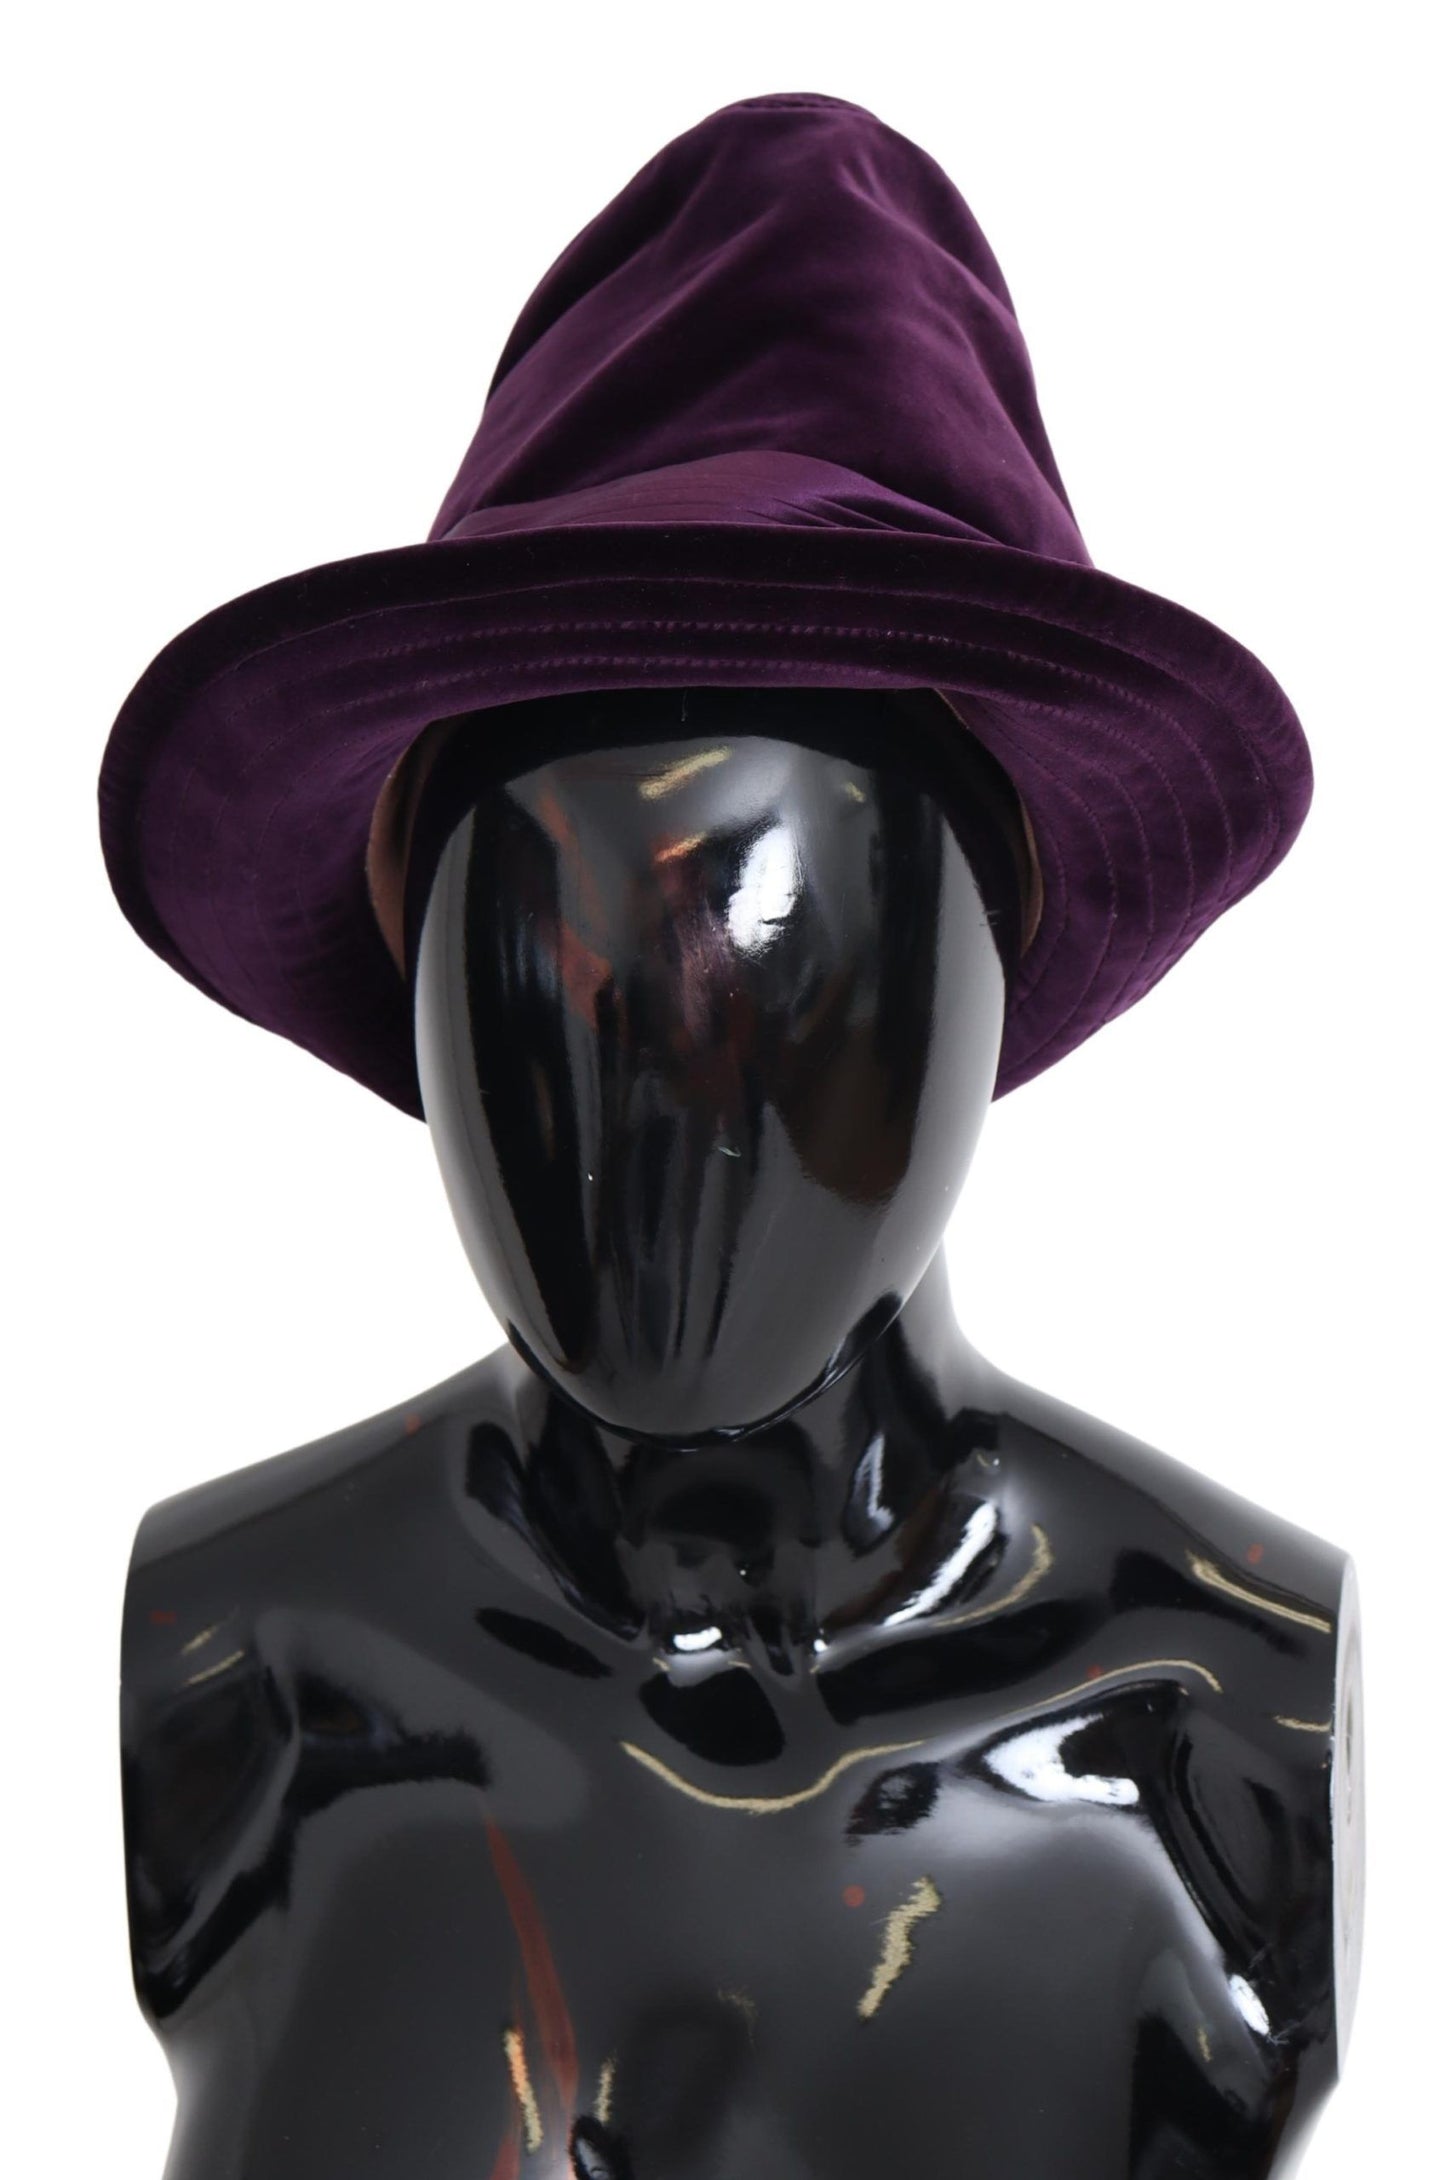 Purple Velvet Cotton Tall Fedora Capello Hat